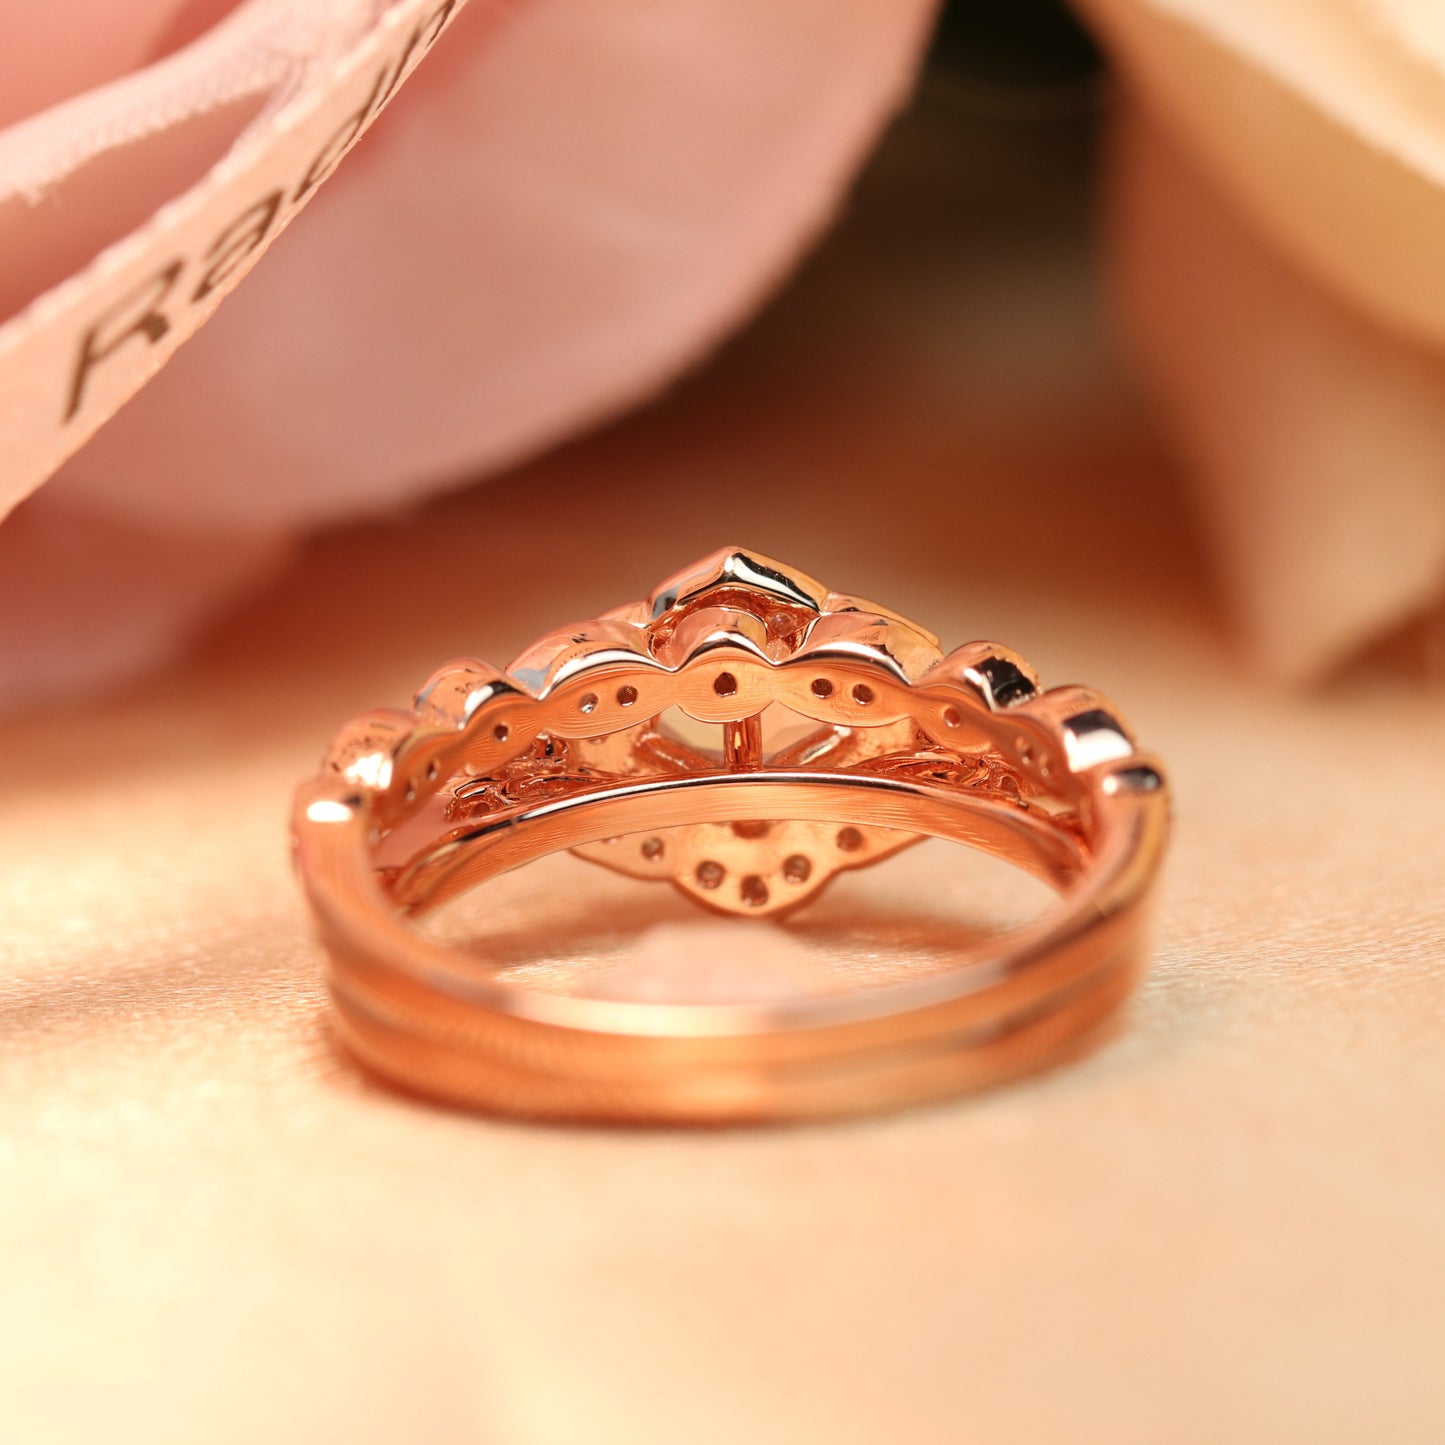 1.45 carat Flower Leaf Design Rainbow Moonstone Bridal Wedding Ring Set with Diamond on Rose Gold